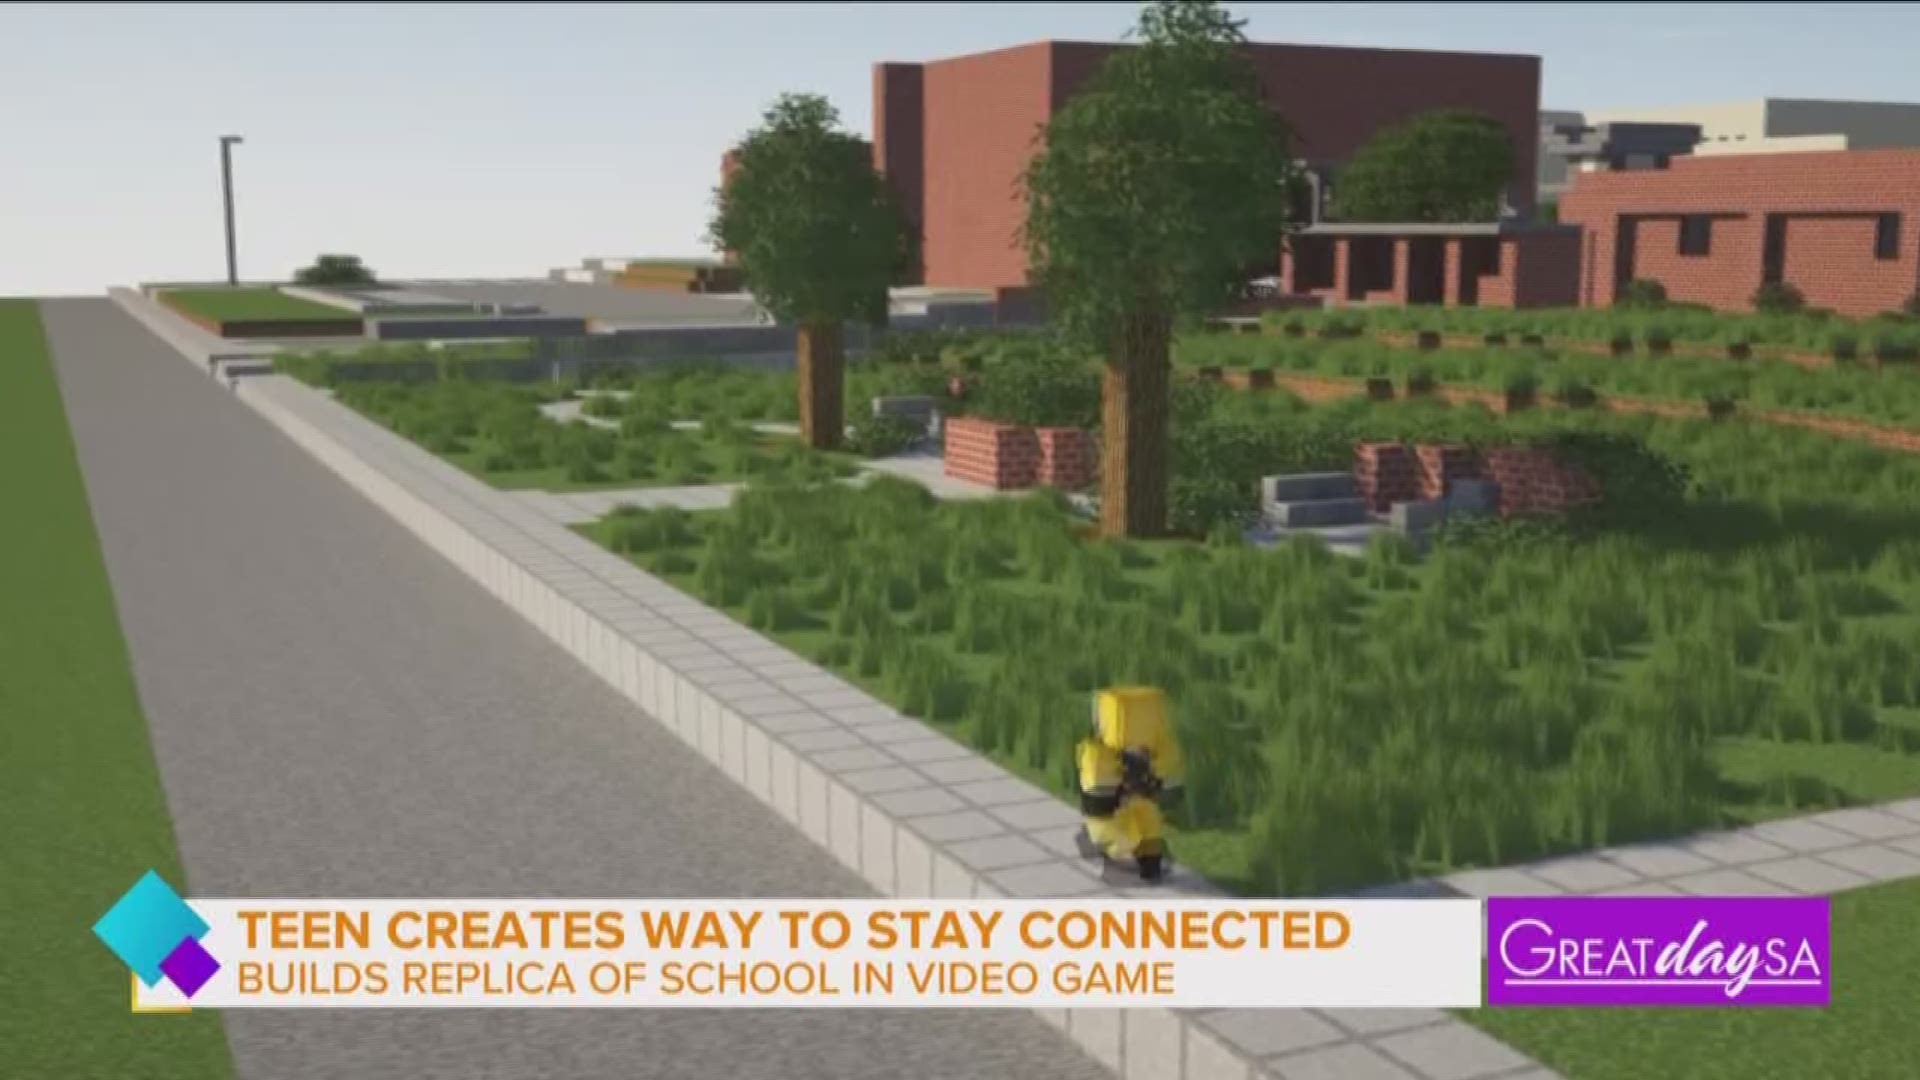 San Antonio teen builds replica of school in video game for his classmates